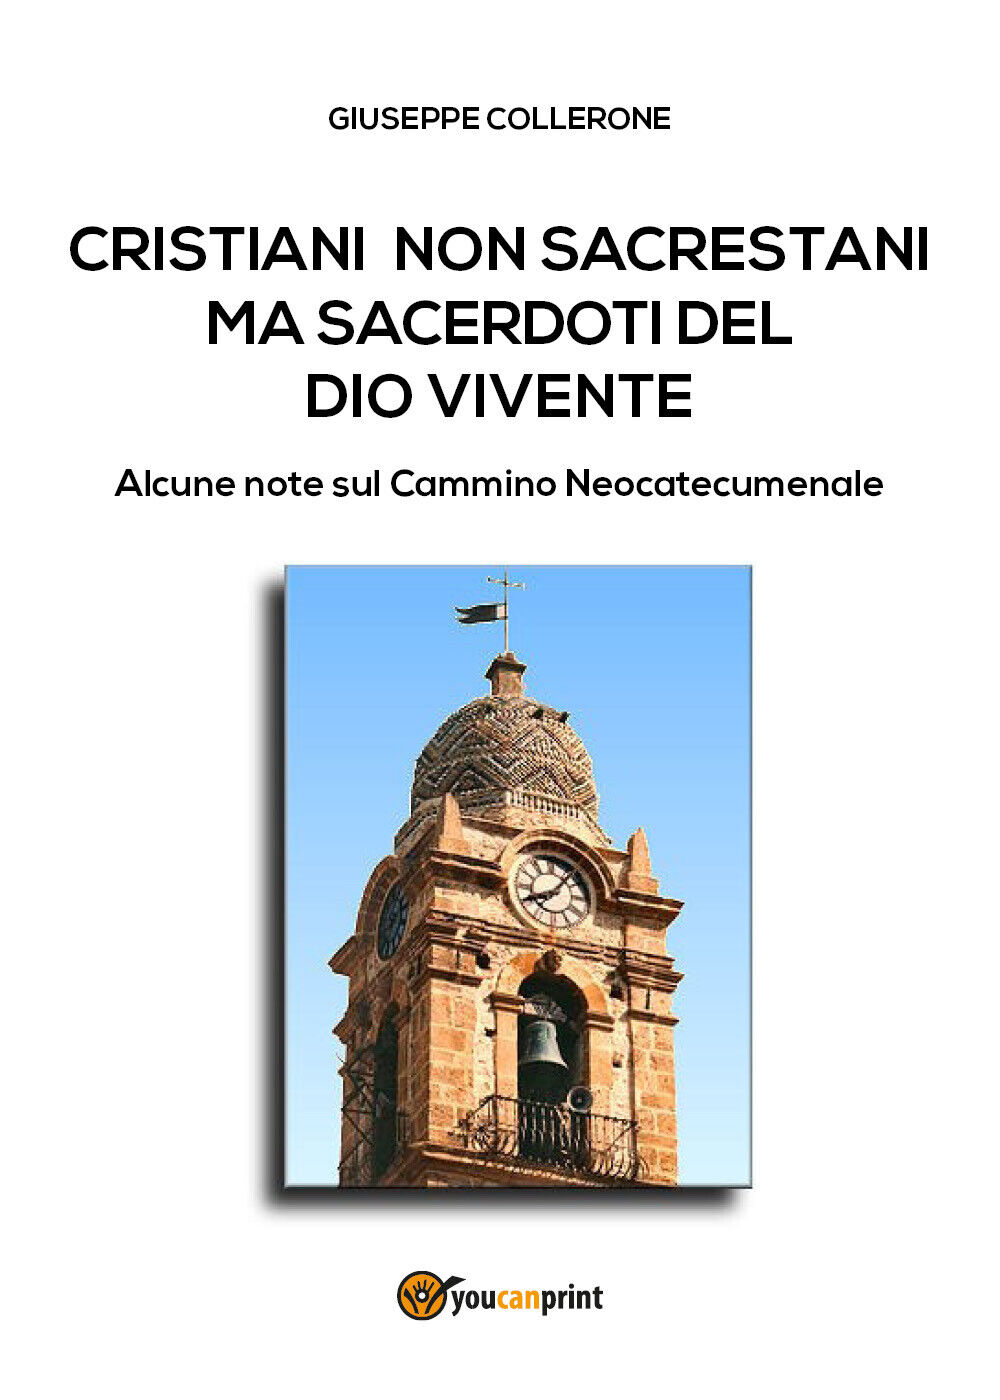 Cristiani non sacrestani  di Giuseppe Collerone,  2018,  Youcanprint